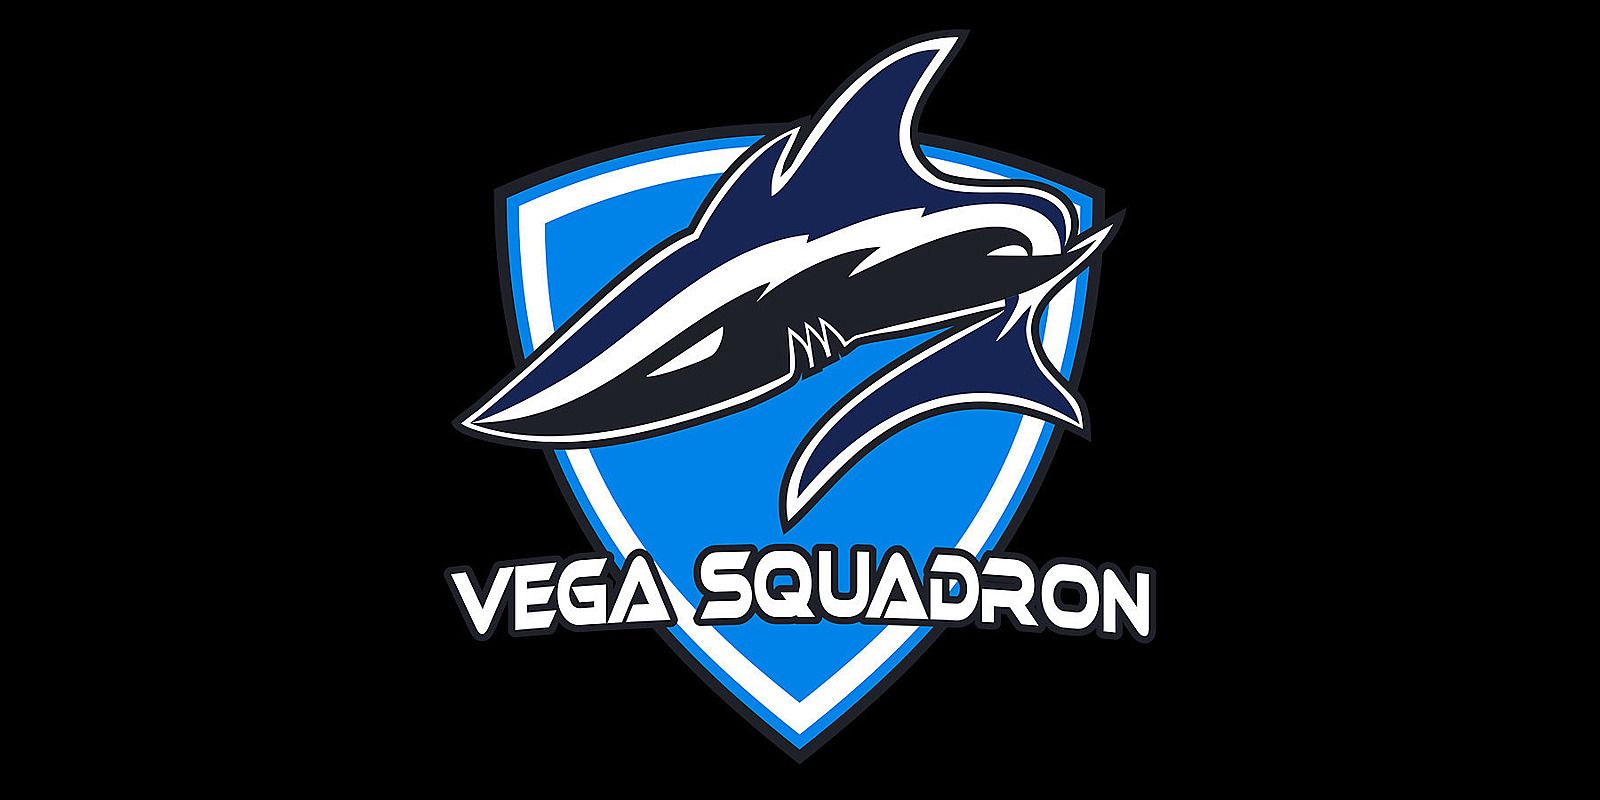 Vega Squadron представила обновленный состав по League of Legends